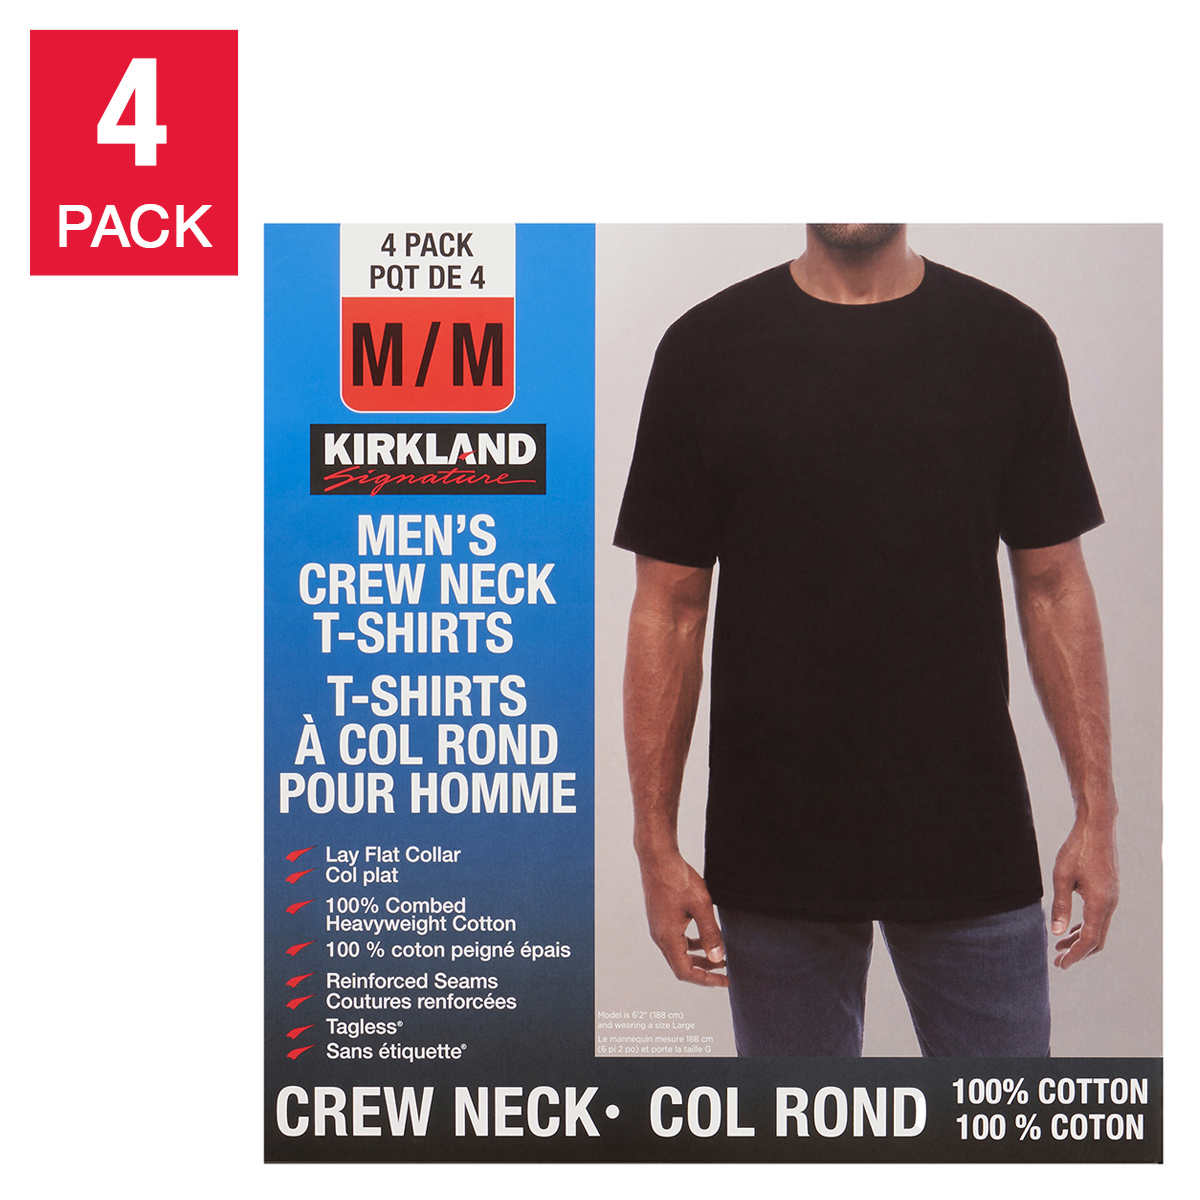 Men's Crew-Neck black T-shirt made of 100% organic cotton - Bread